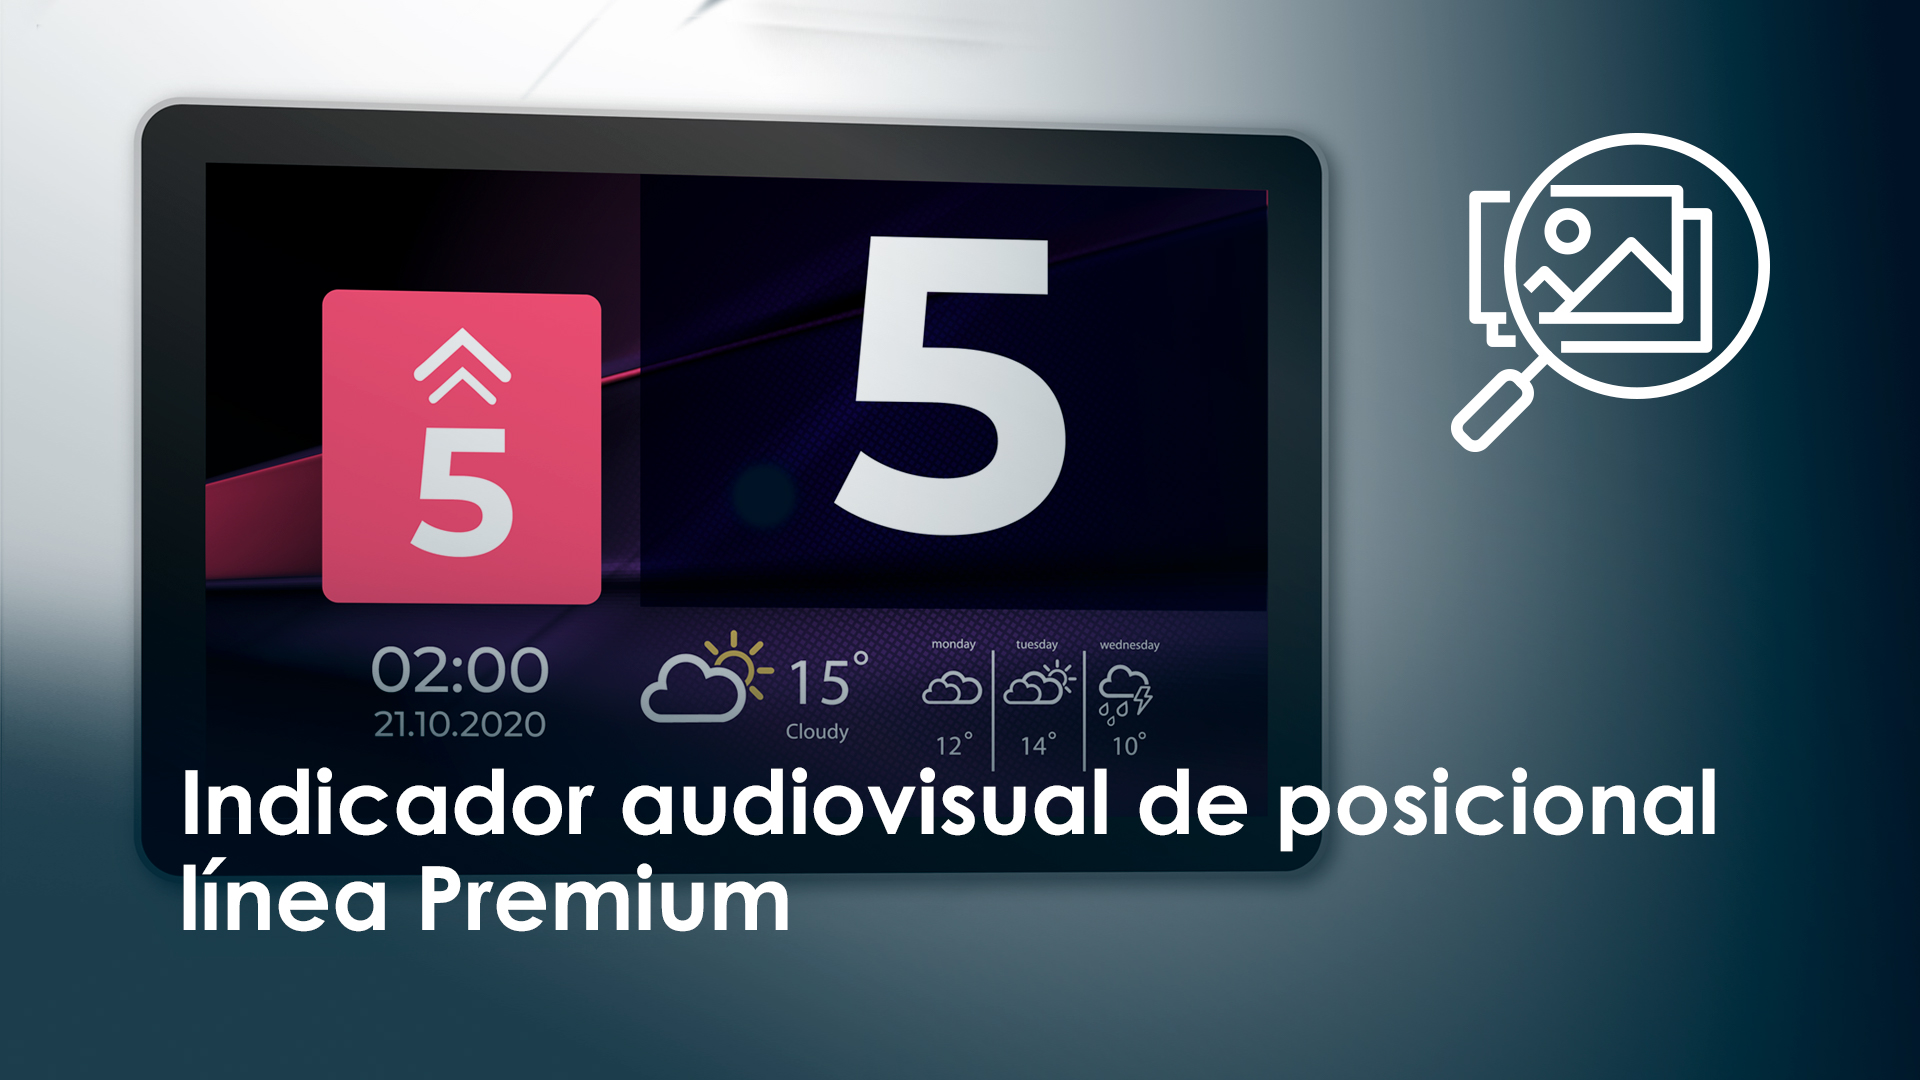 ndicador audiovisual de posicional línea Premium